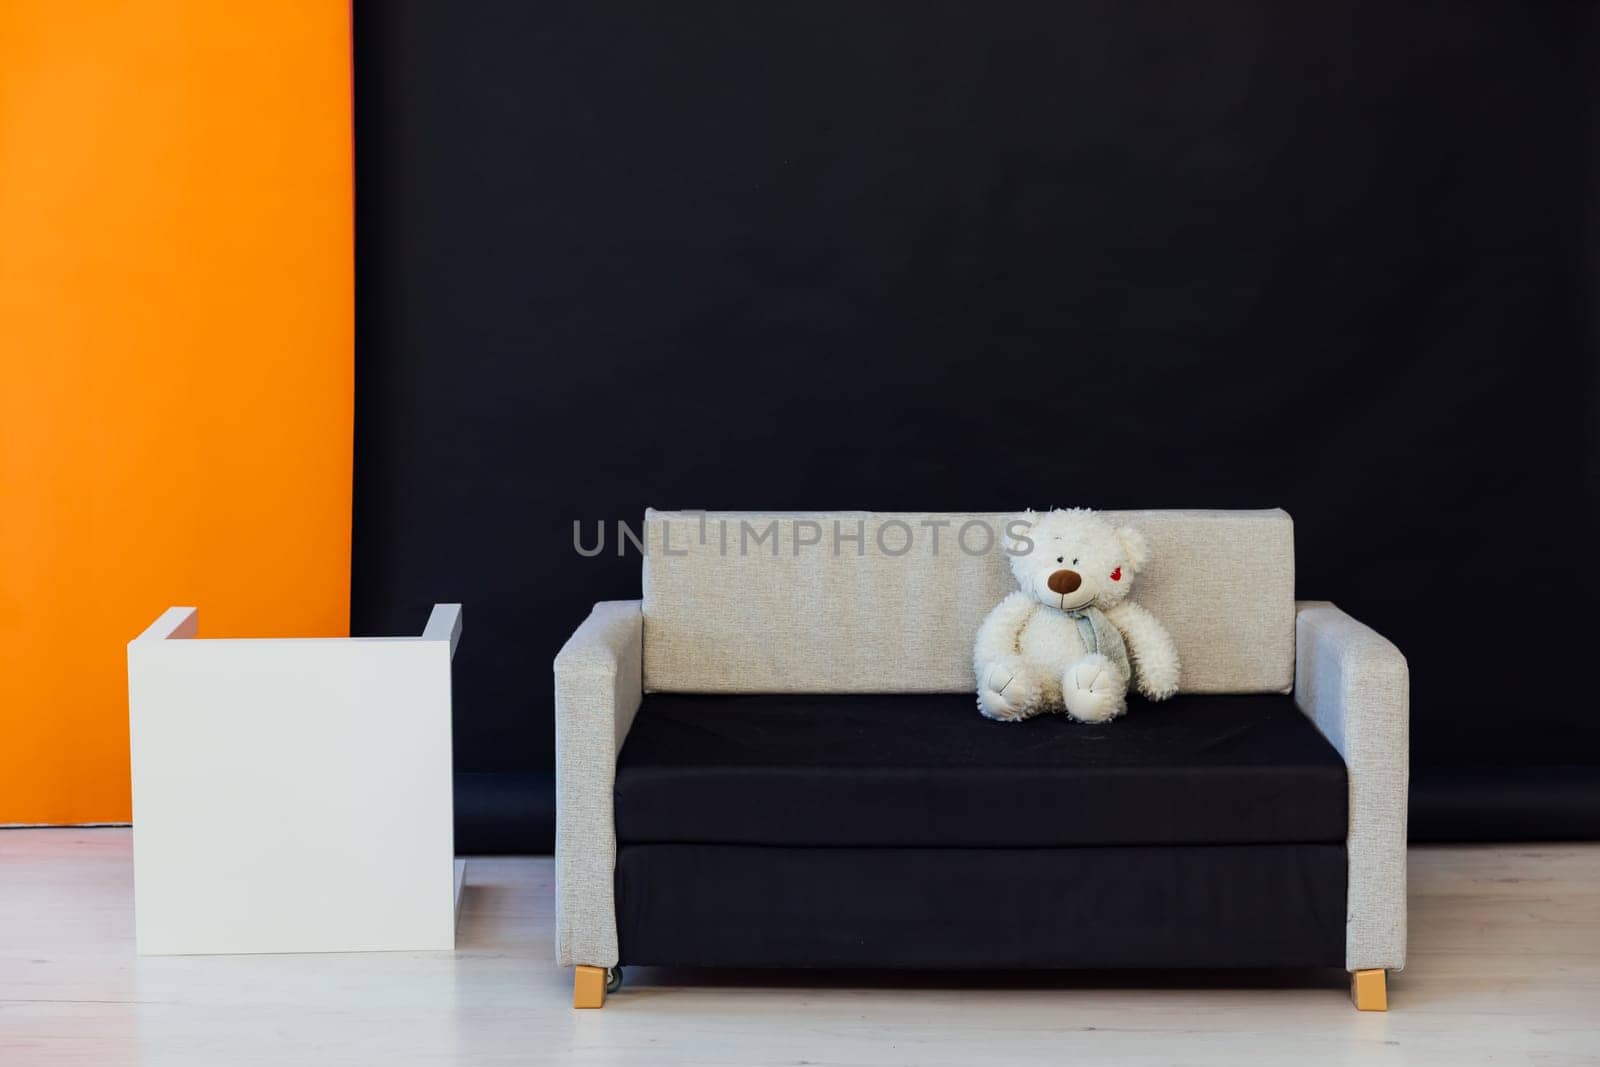 sofa in the interior of a black and orange room